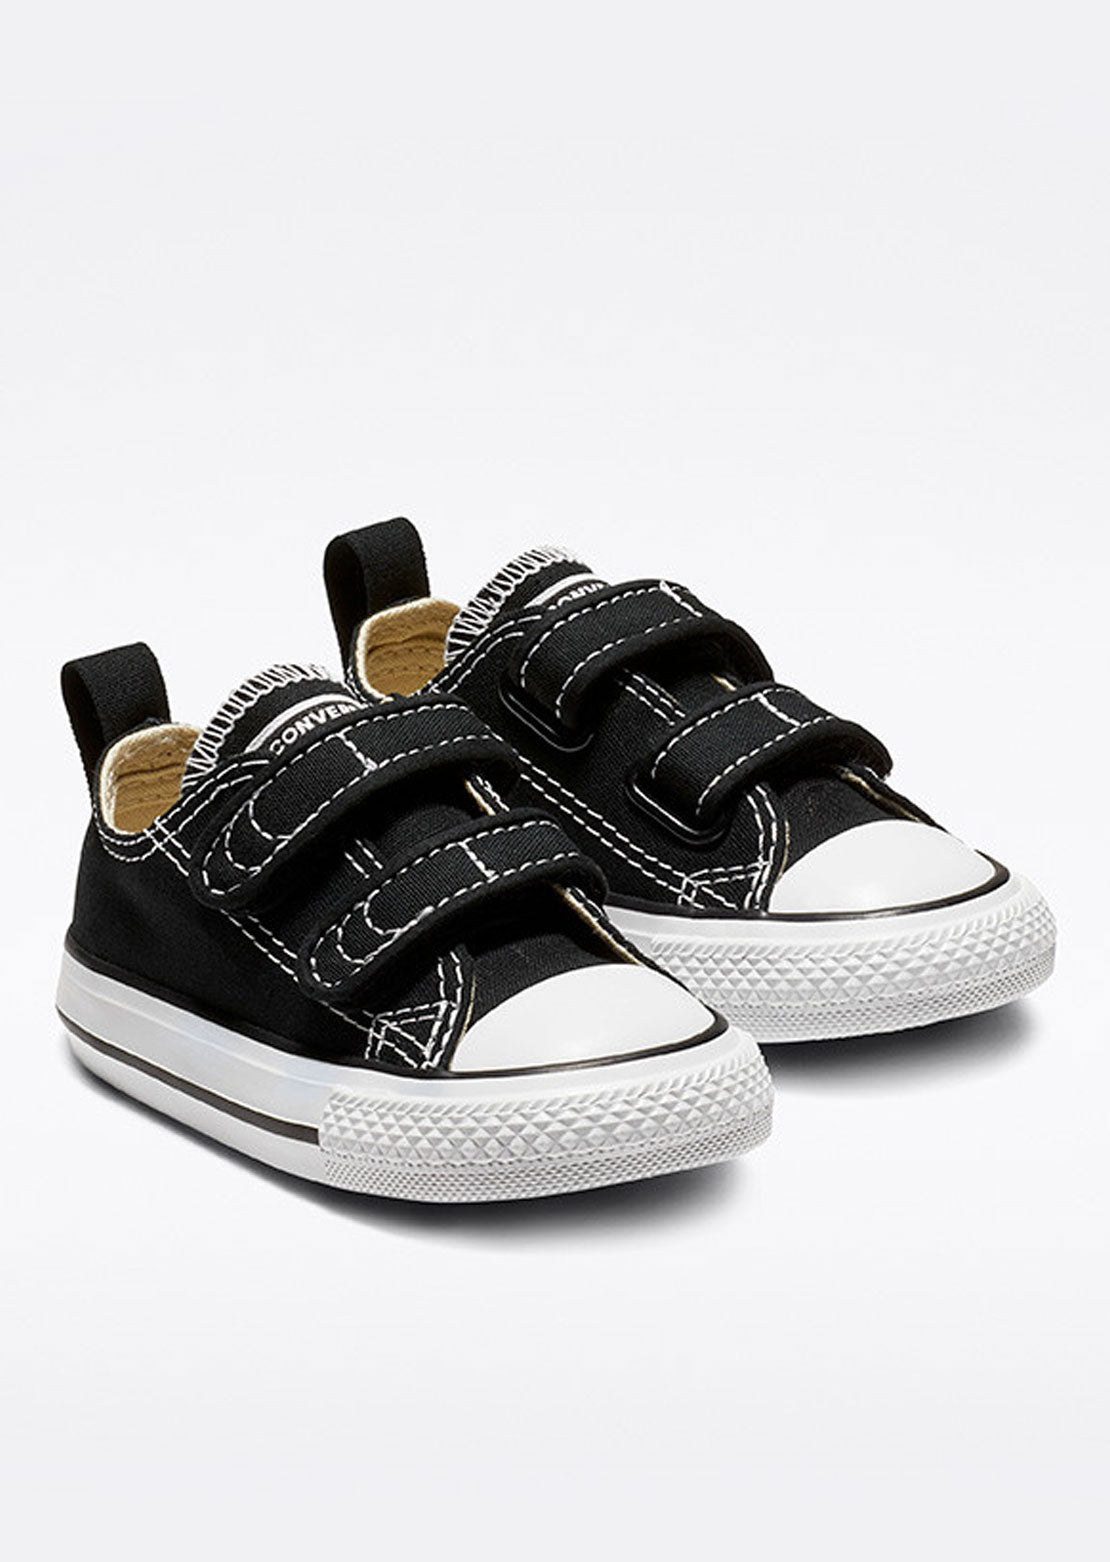 Converse Junior Toddler Chuck Taylor All Star 2V Shoes Black